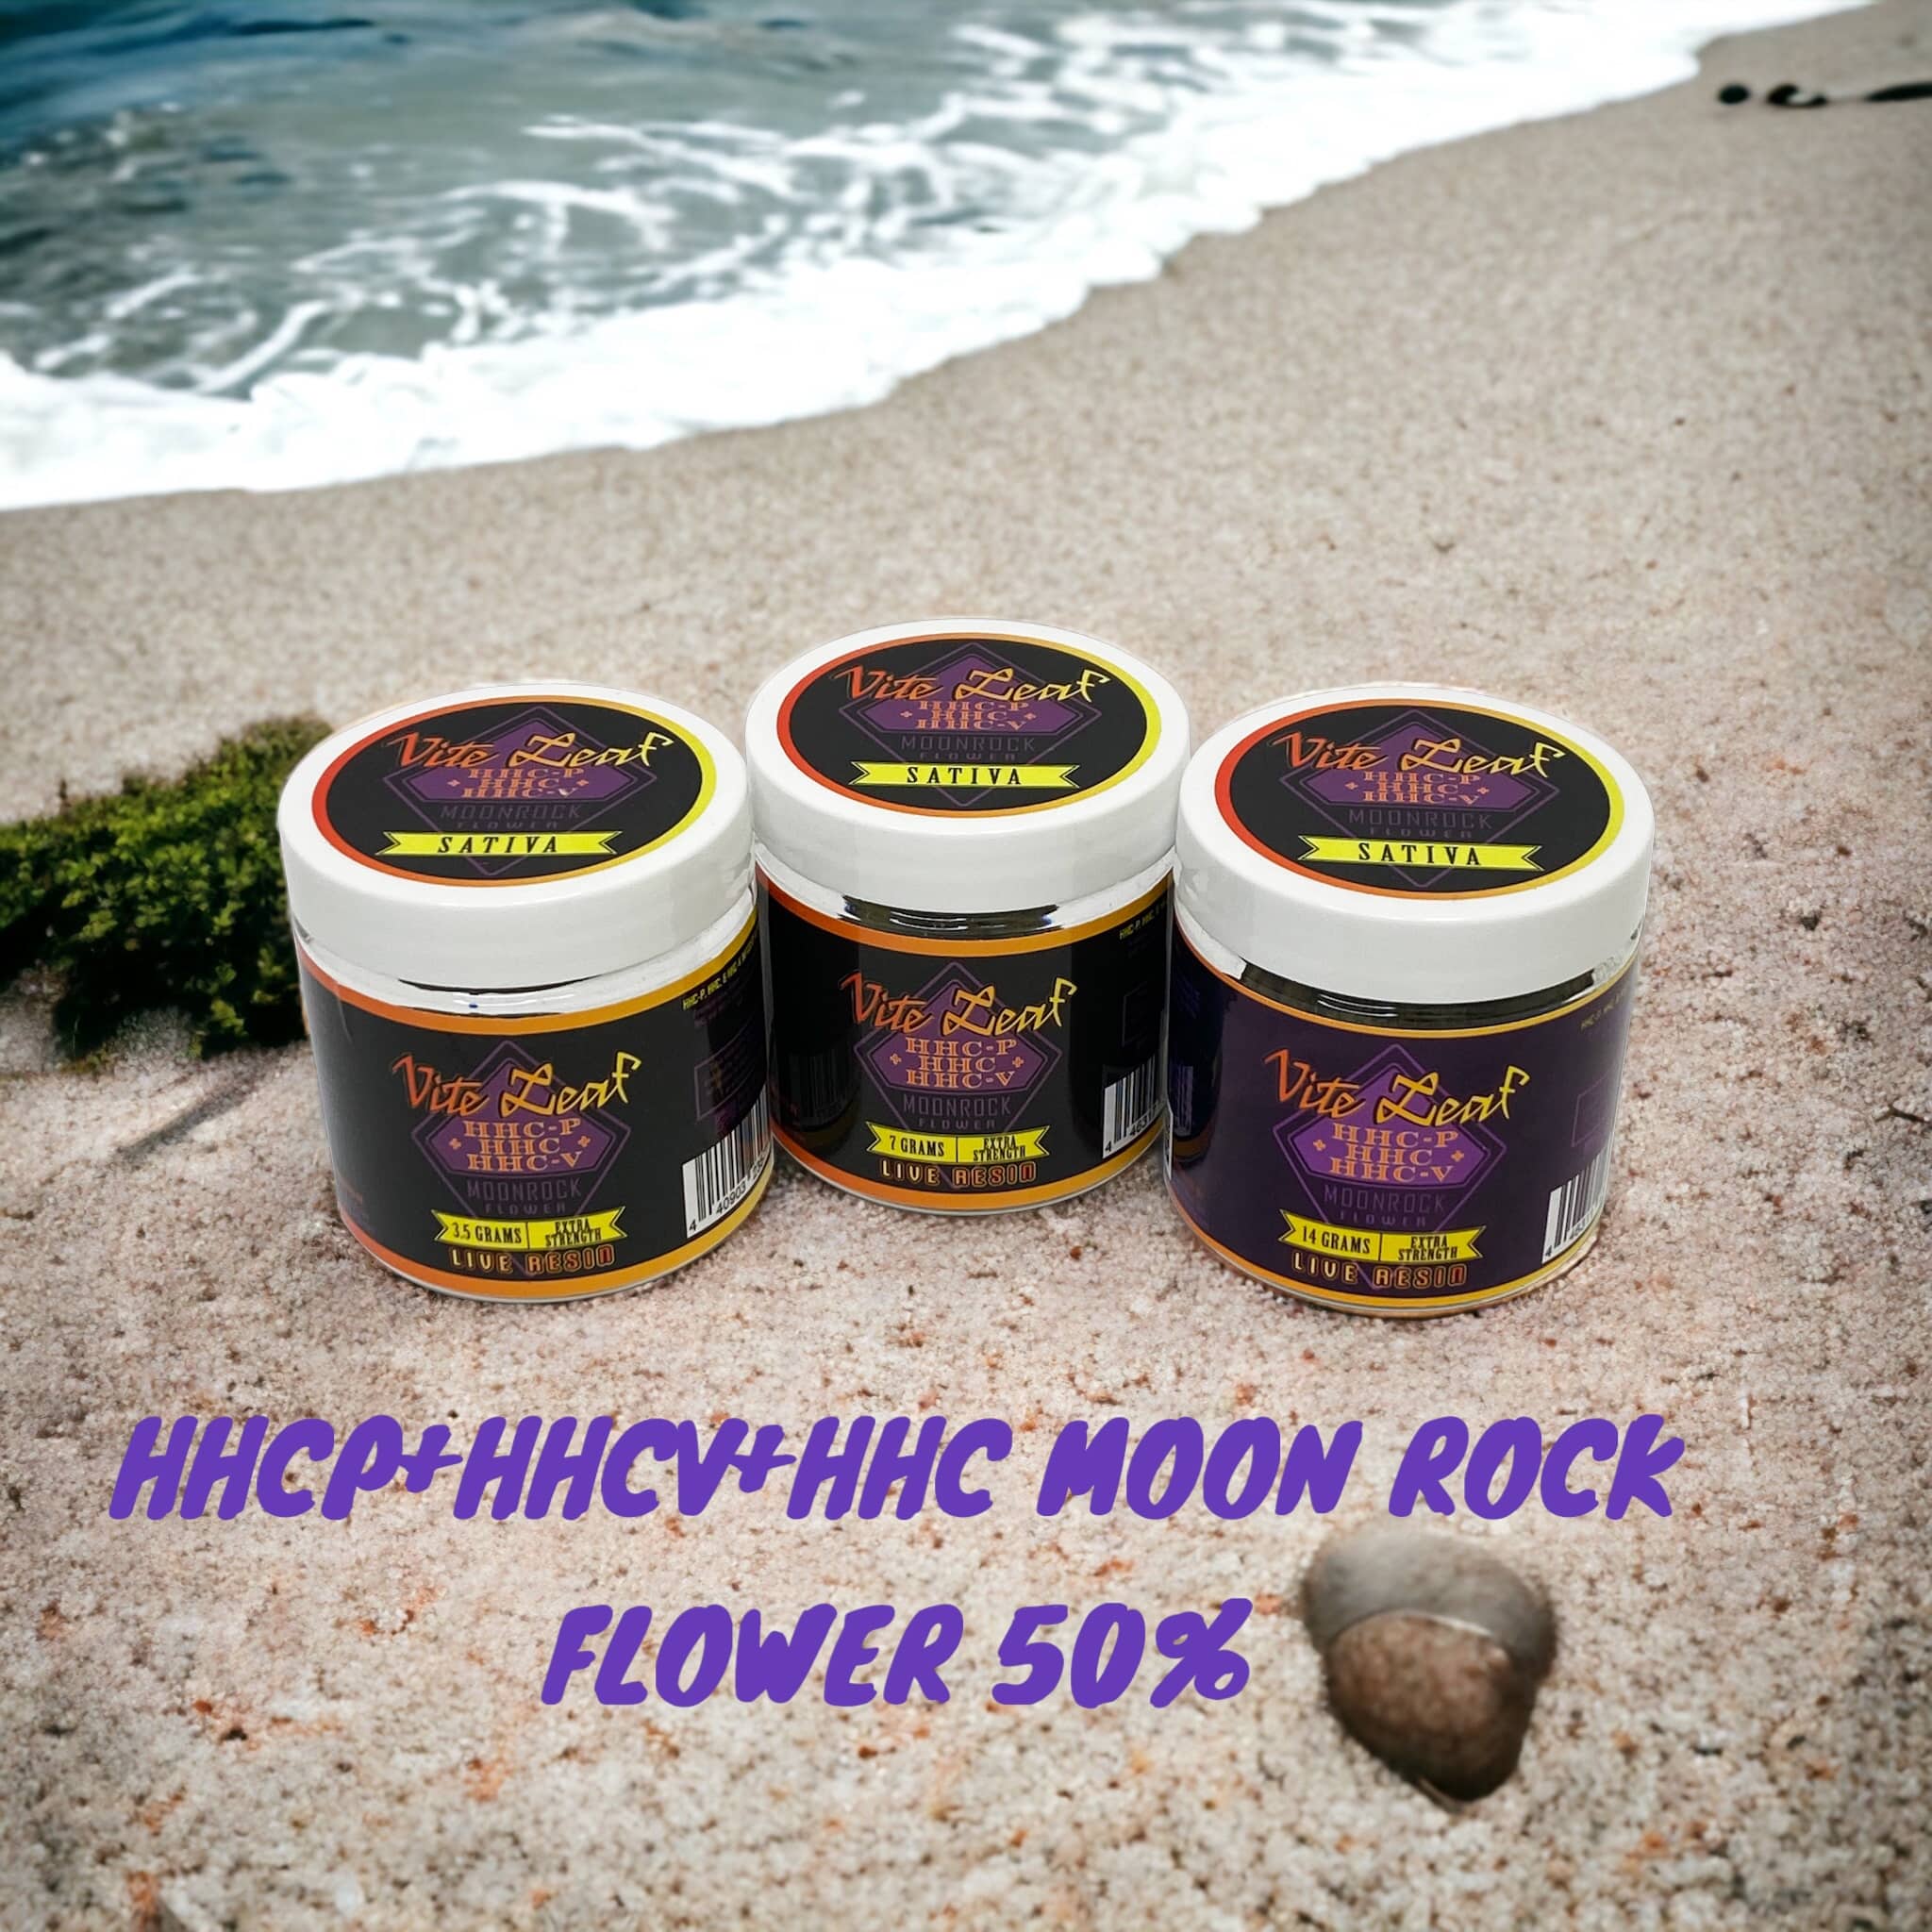 hhcp moon rock